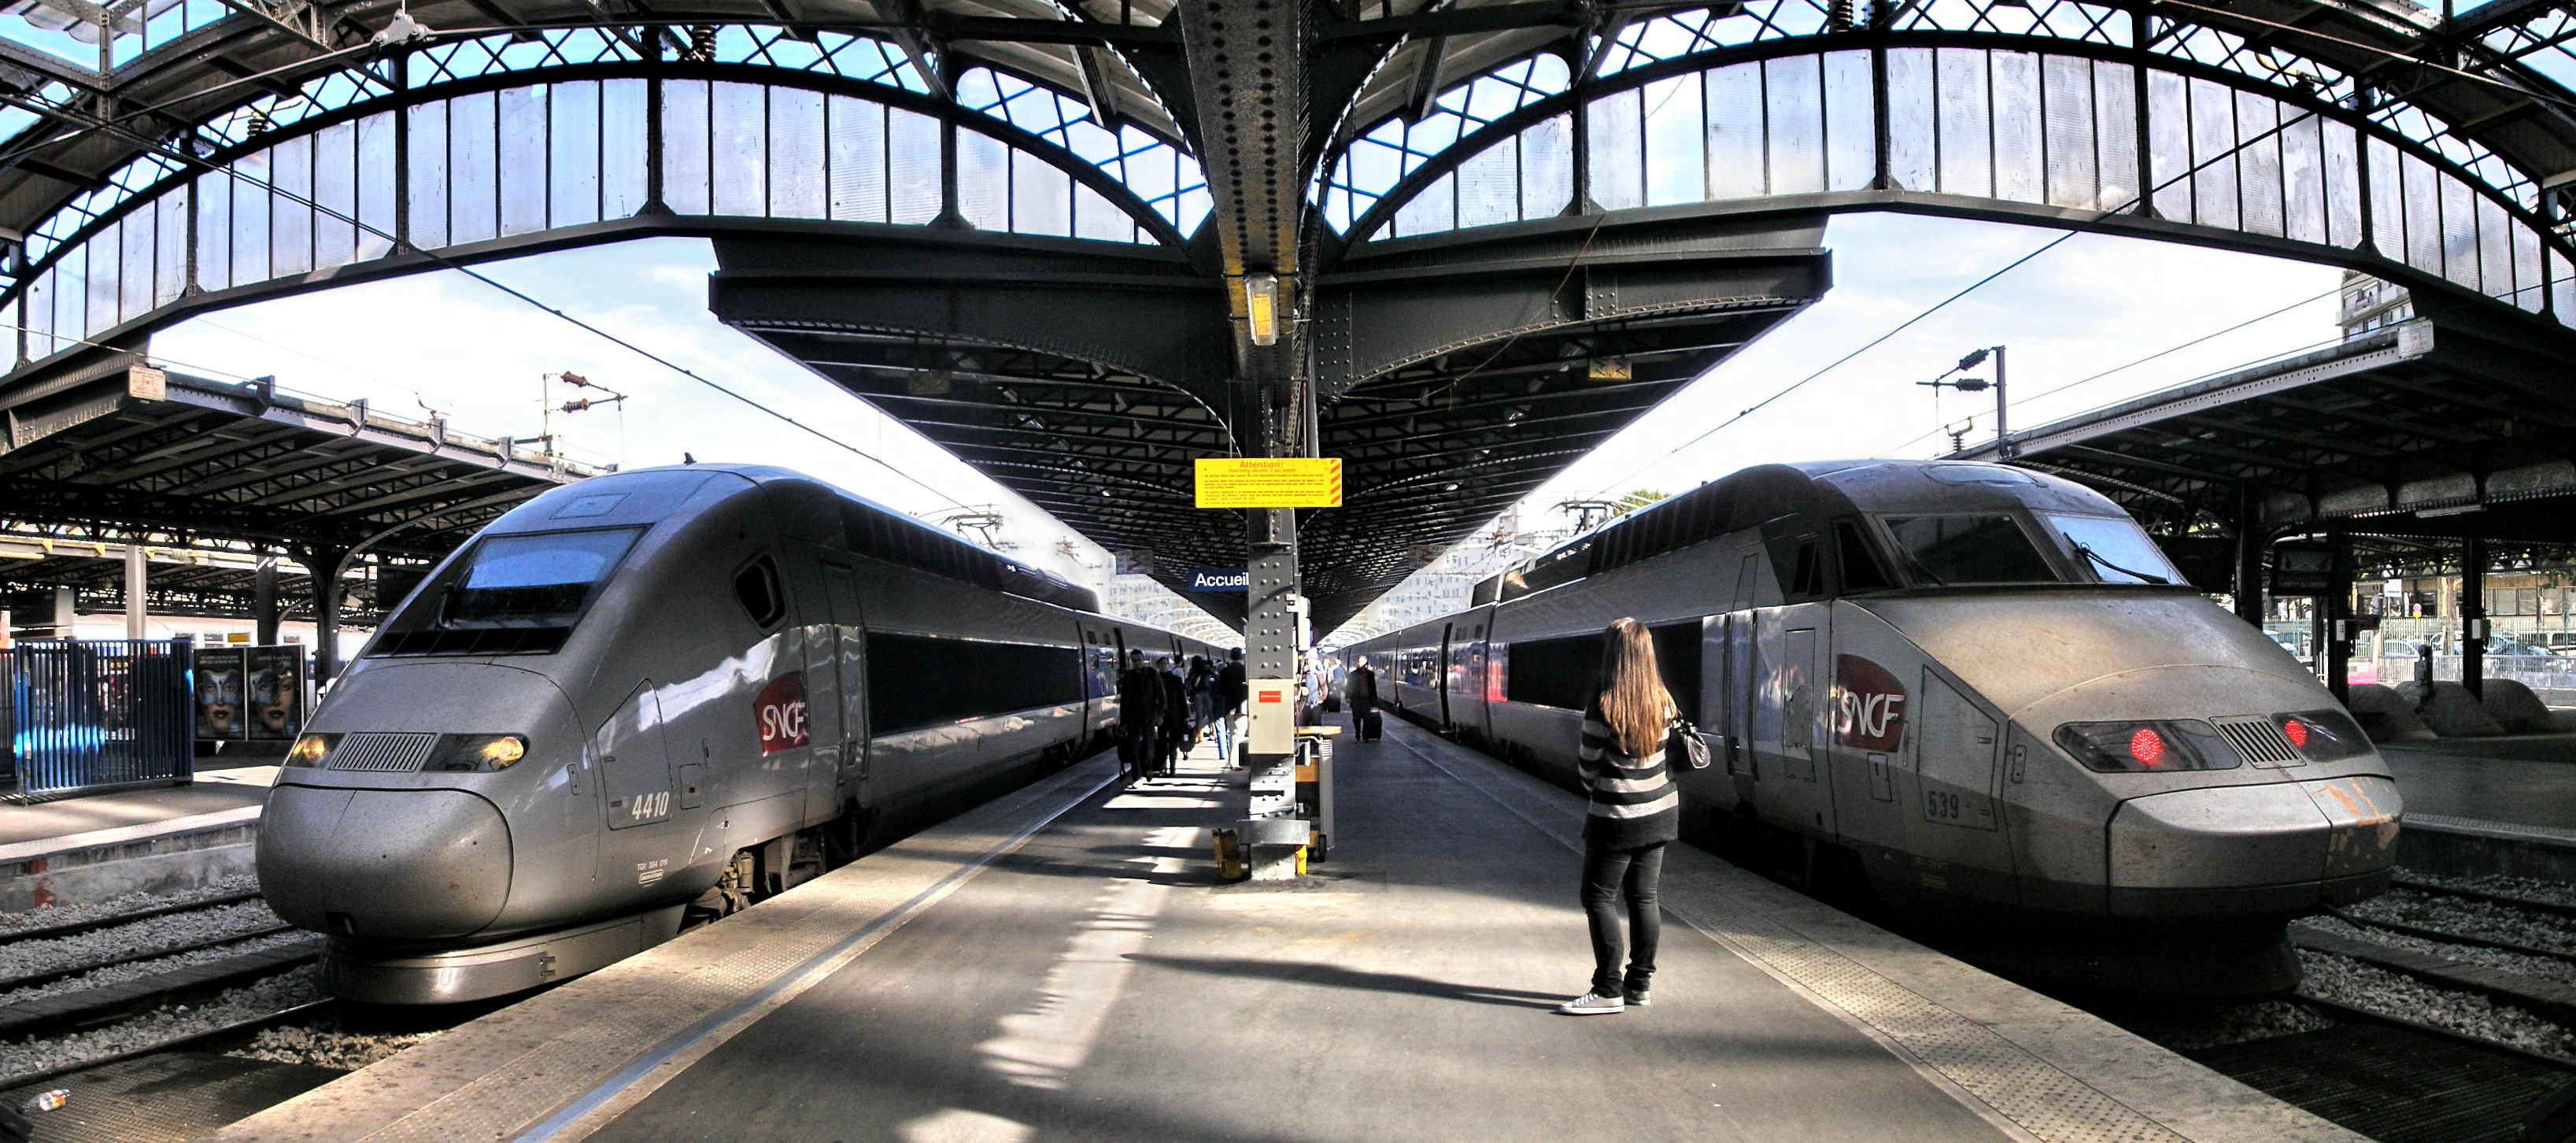 Bahnhof Paris Est